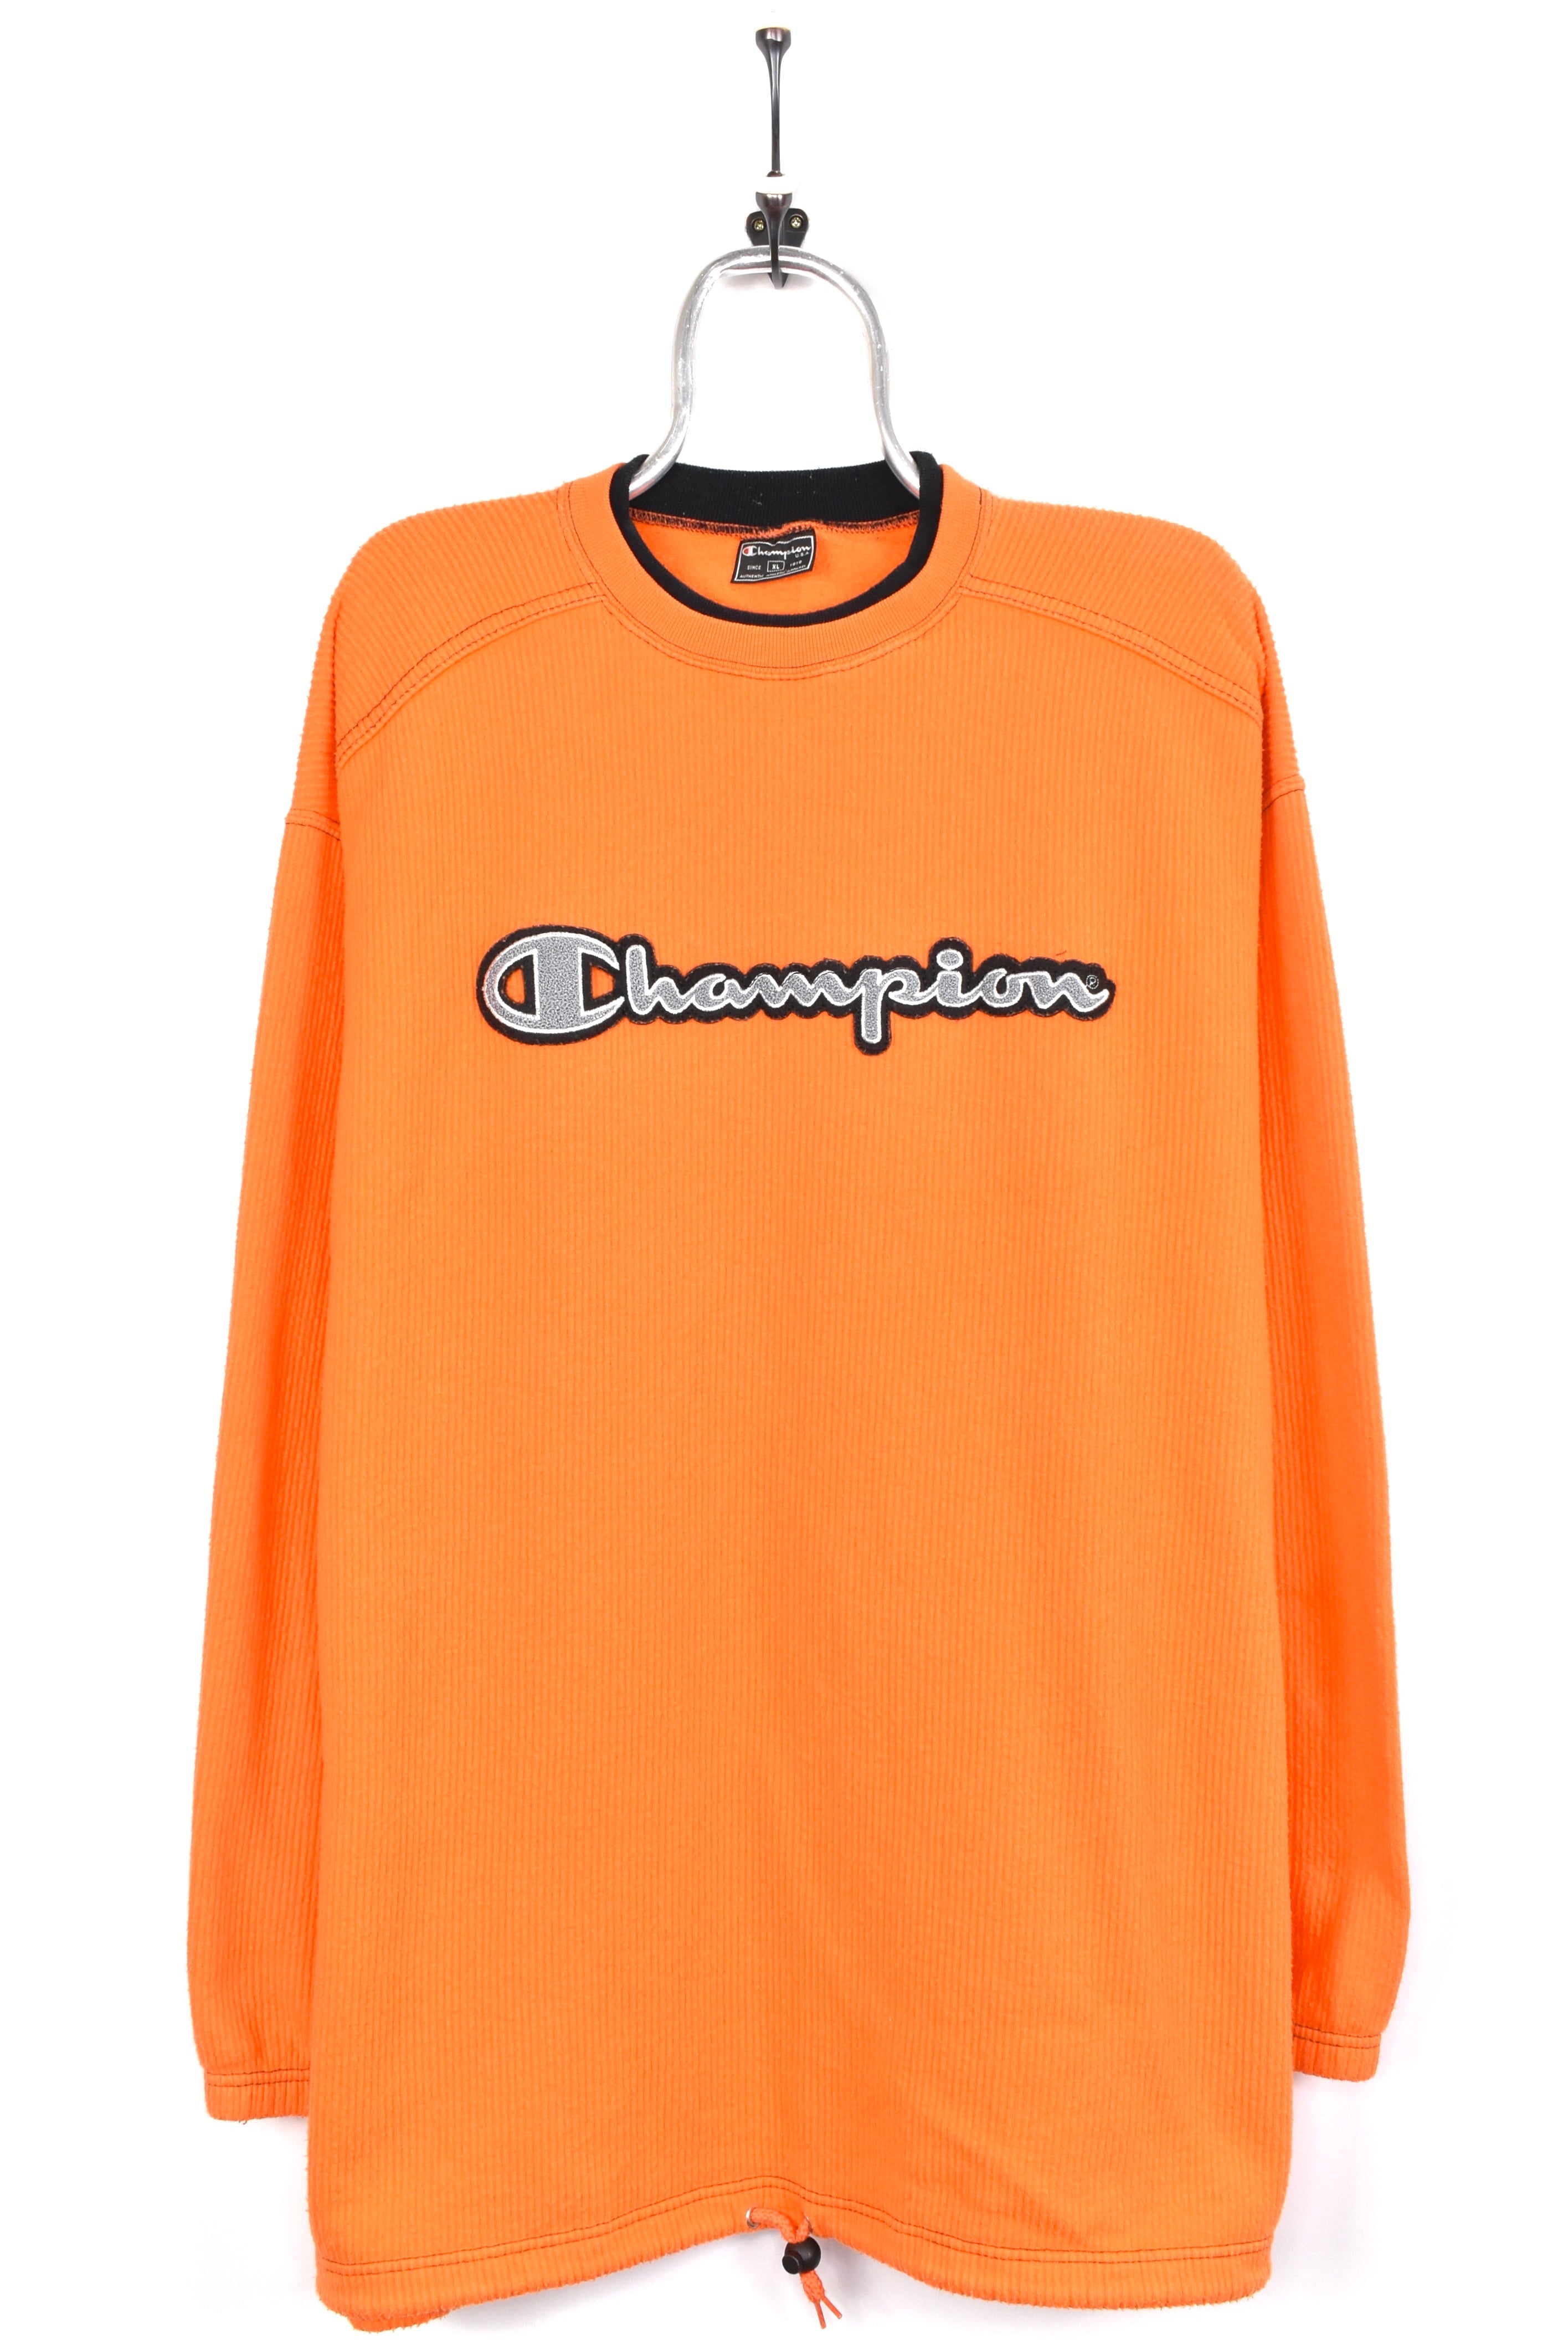 Vintage Champion sweatshirt, orange embroidered corduroy crewneck - AU XXL CHAMPION